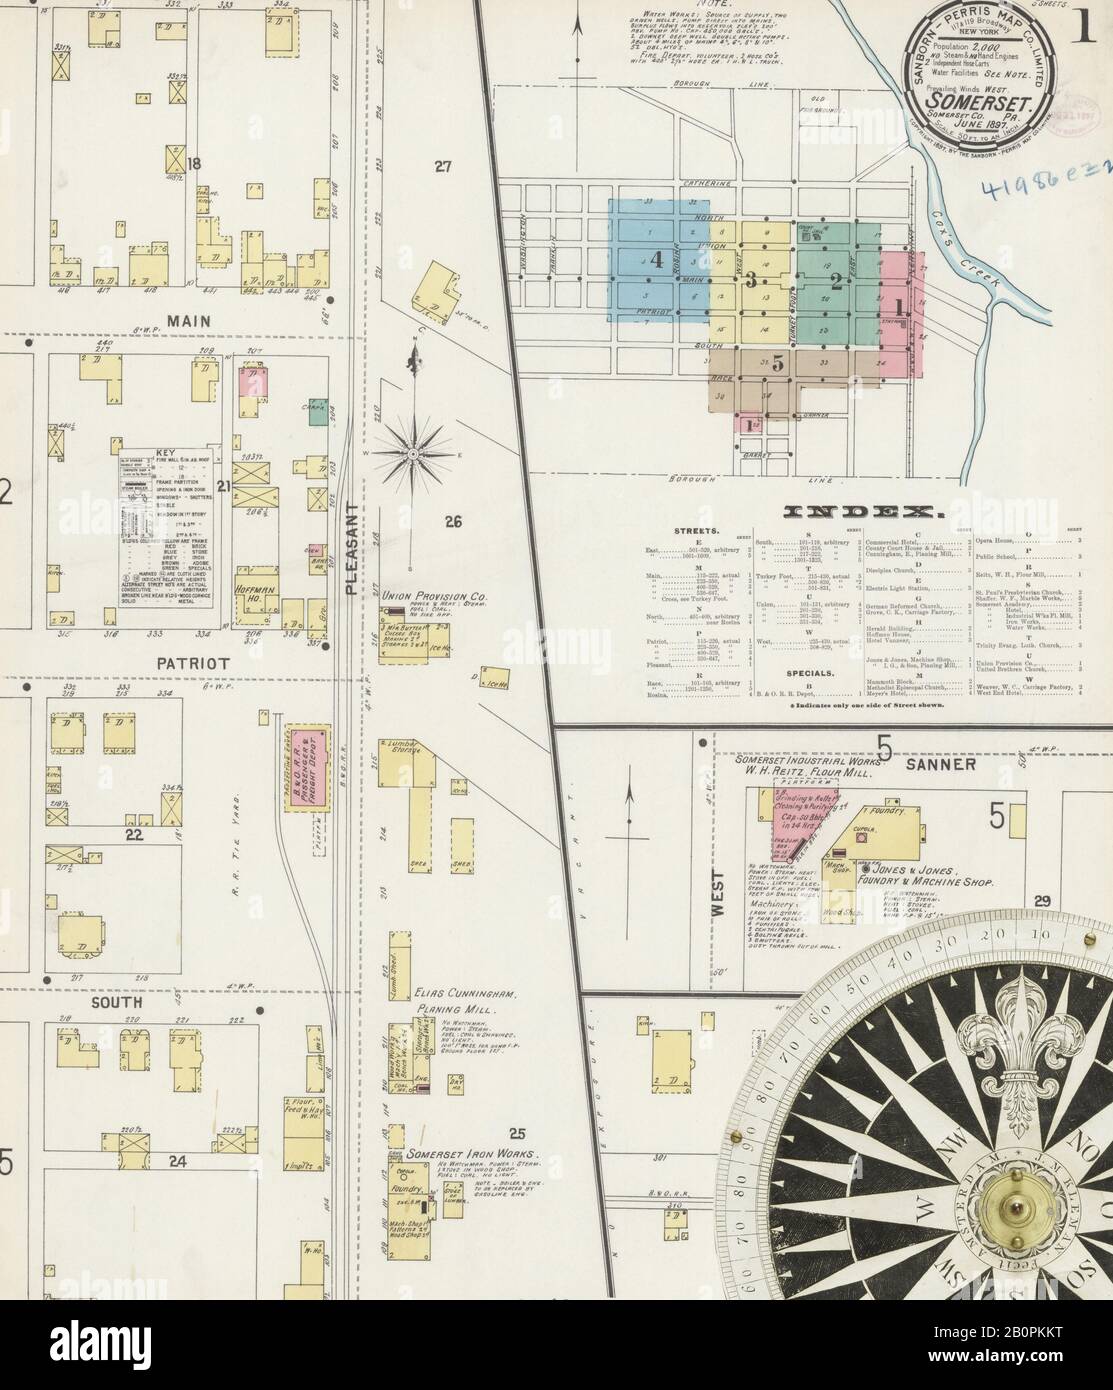 Imagen 1 De Sanborn Fire Insurance Map De Somerset, Somerset County, Pennsylvania. Jun 1897. 5 Hoja(s), América, mapa de calles con una brújula del siglo Xix Foto de stock